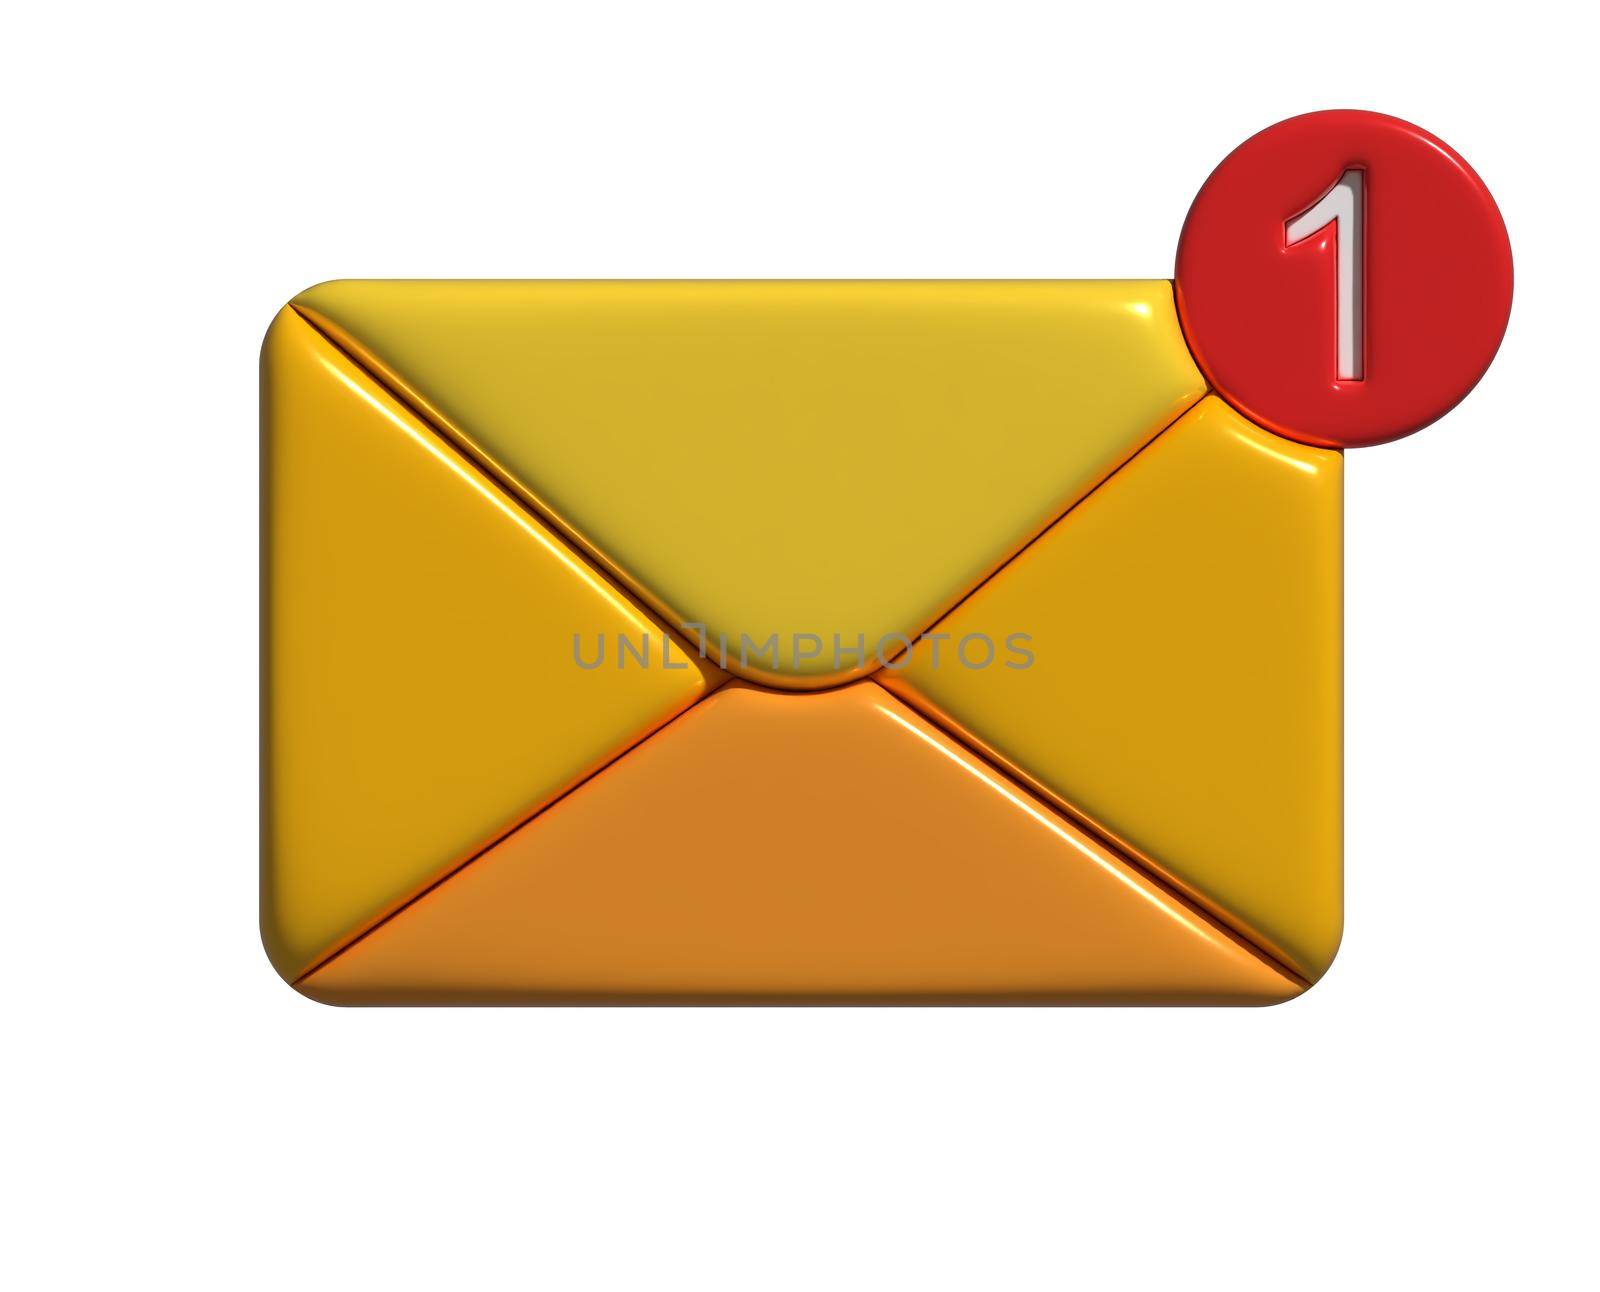 Orange voluminous envelope letter incoming message - 3d illustration by BEMPhoto